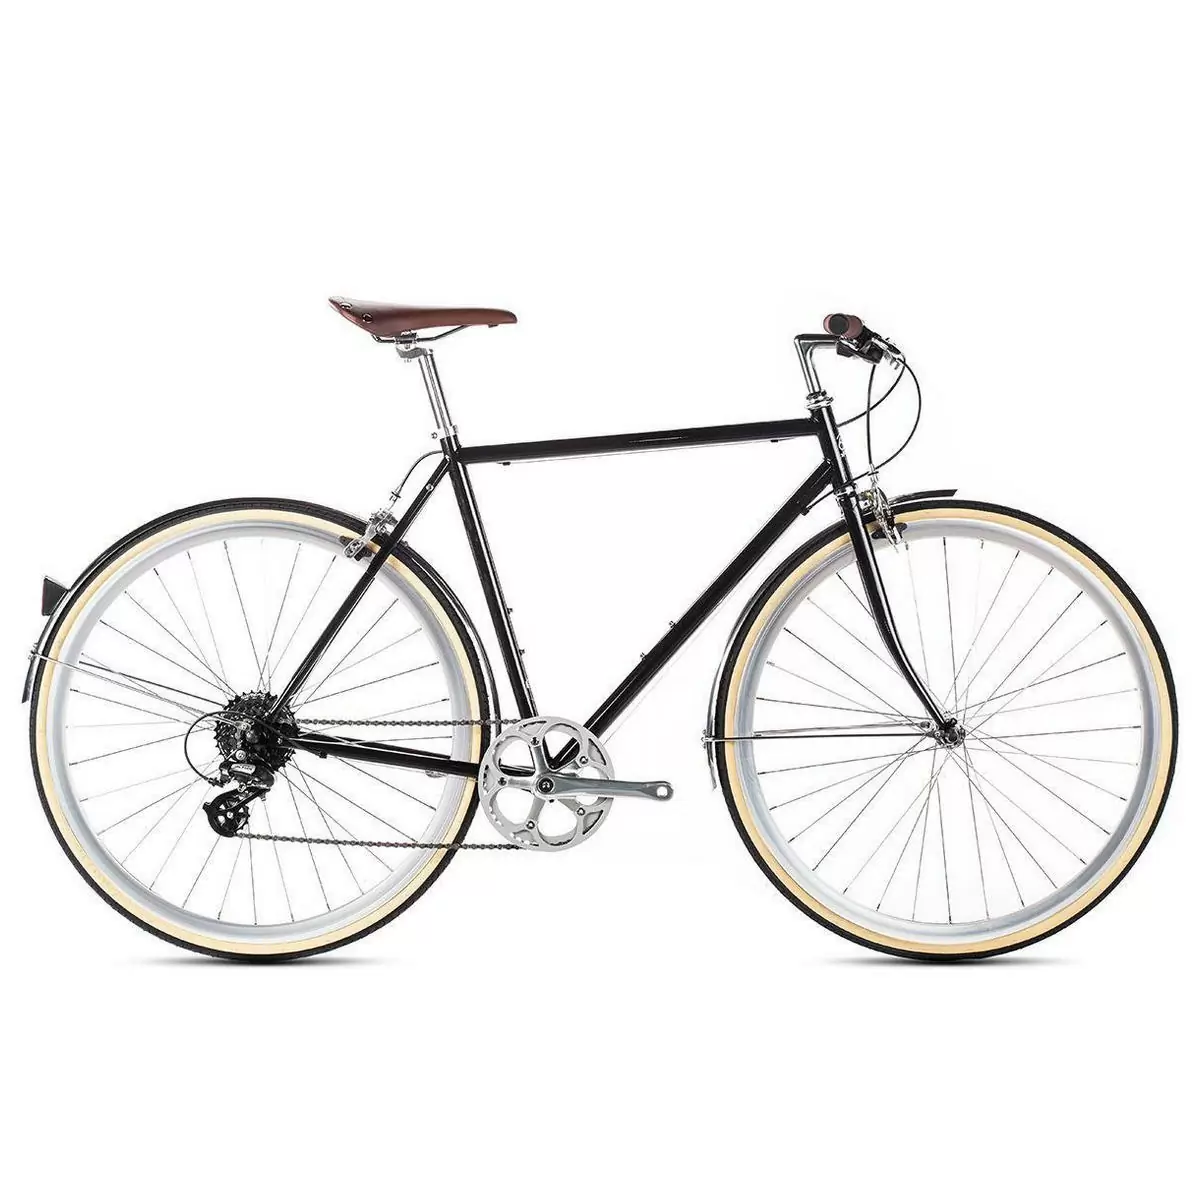 Bicicleta urbana ODYSSEY 8v Delano negra grande 58cm - image